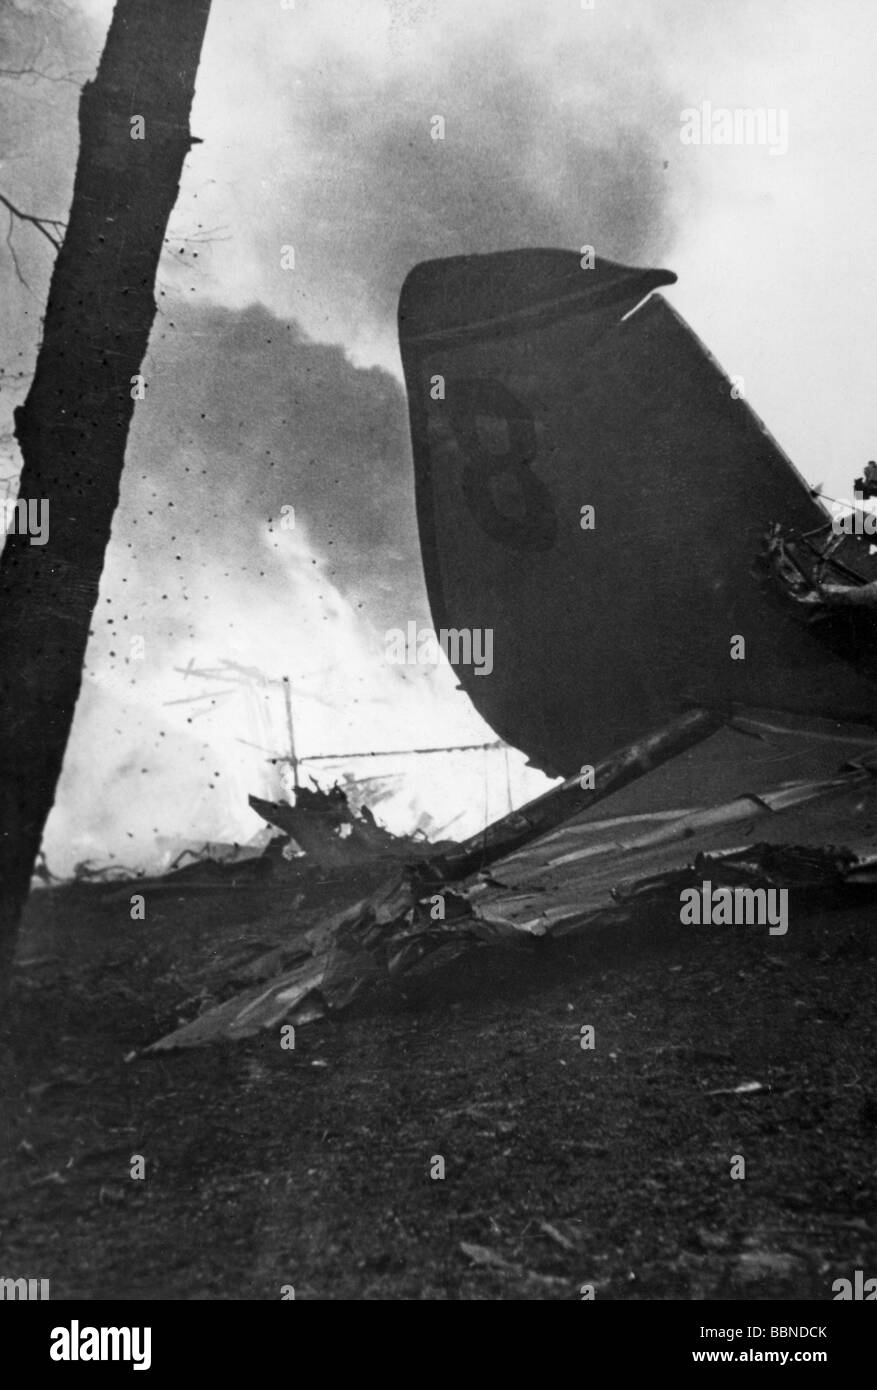 events, Second World War / WWII, Finland, remains of a Soviet bomber shot down over Helsinki, Winter War 1939 - 1940, Stock Photo